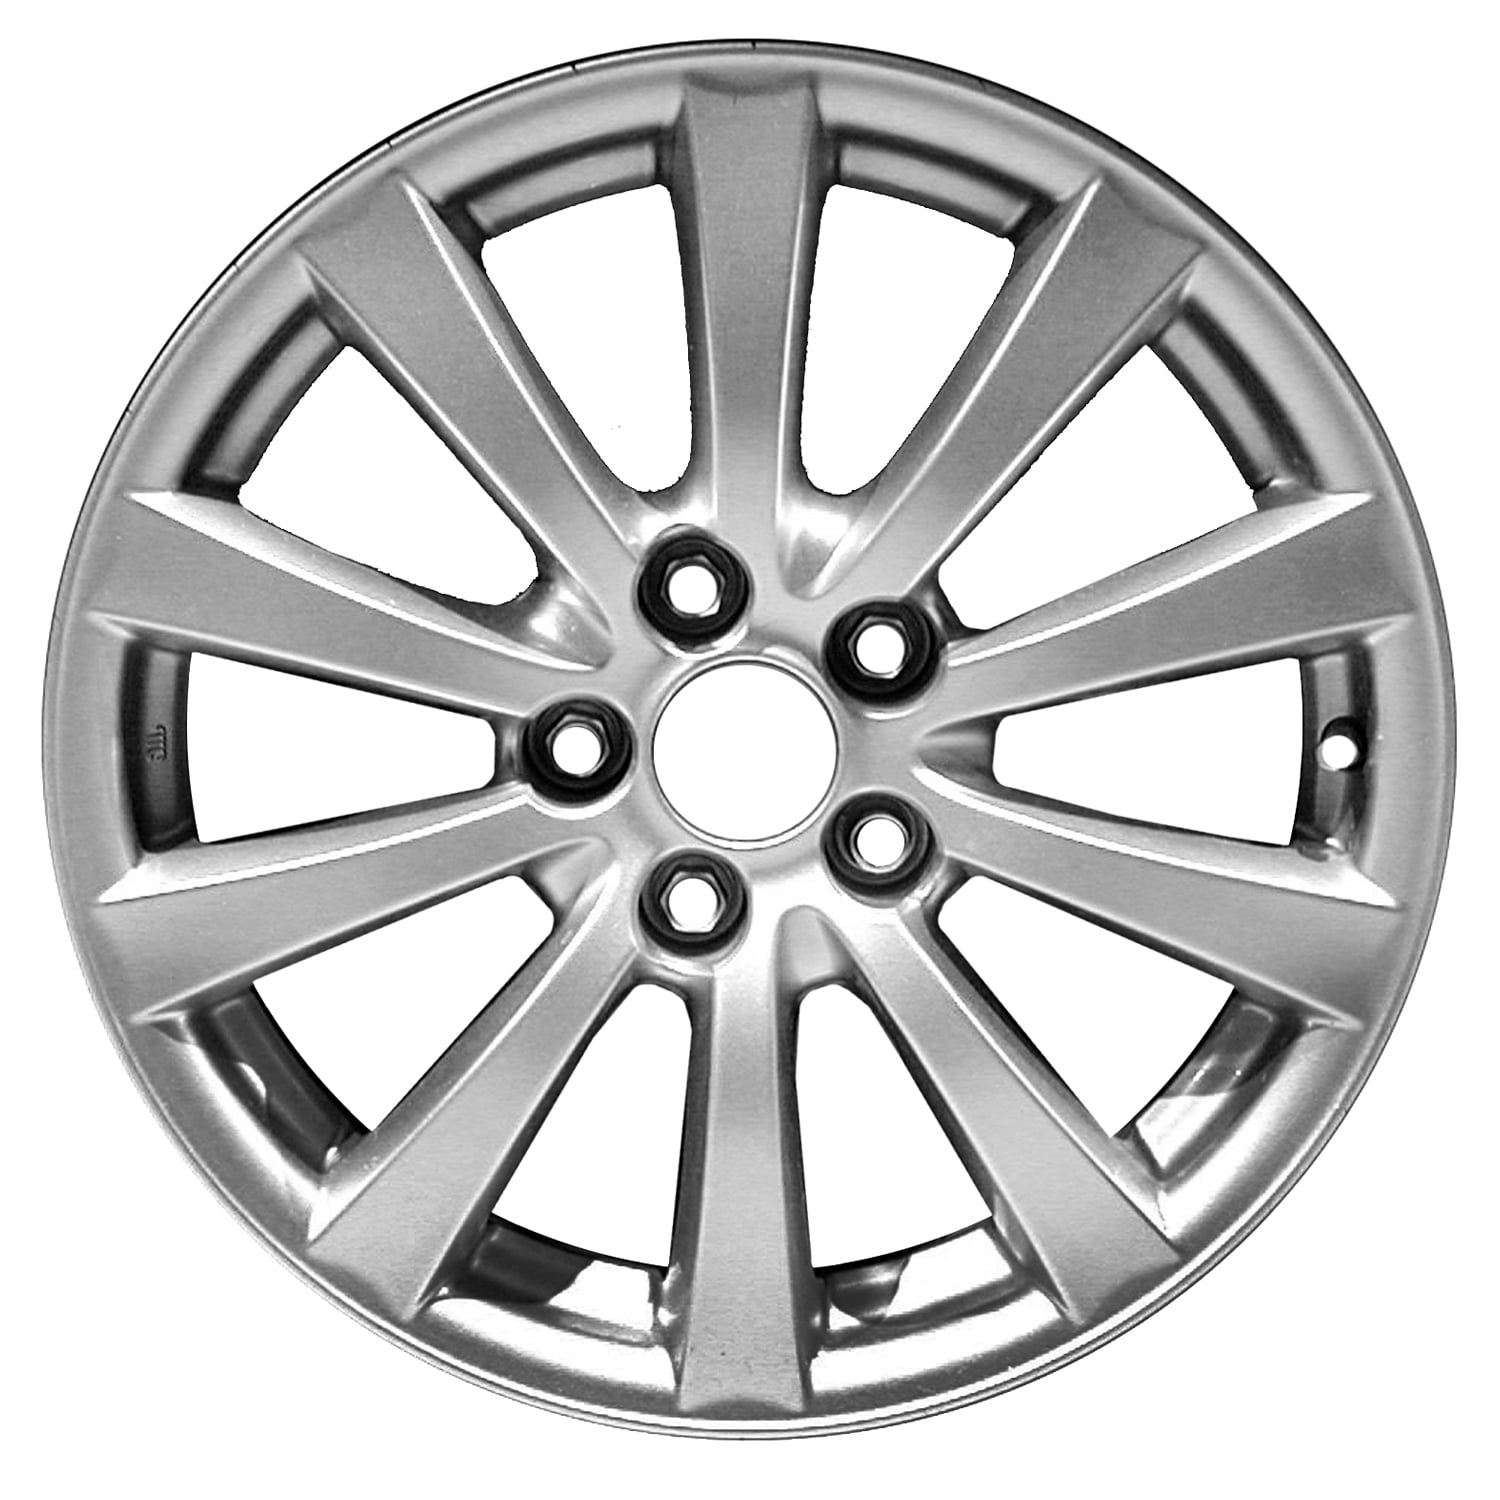 Hyundai Sonata Steel Wheels